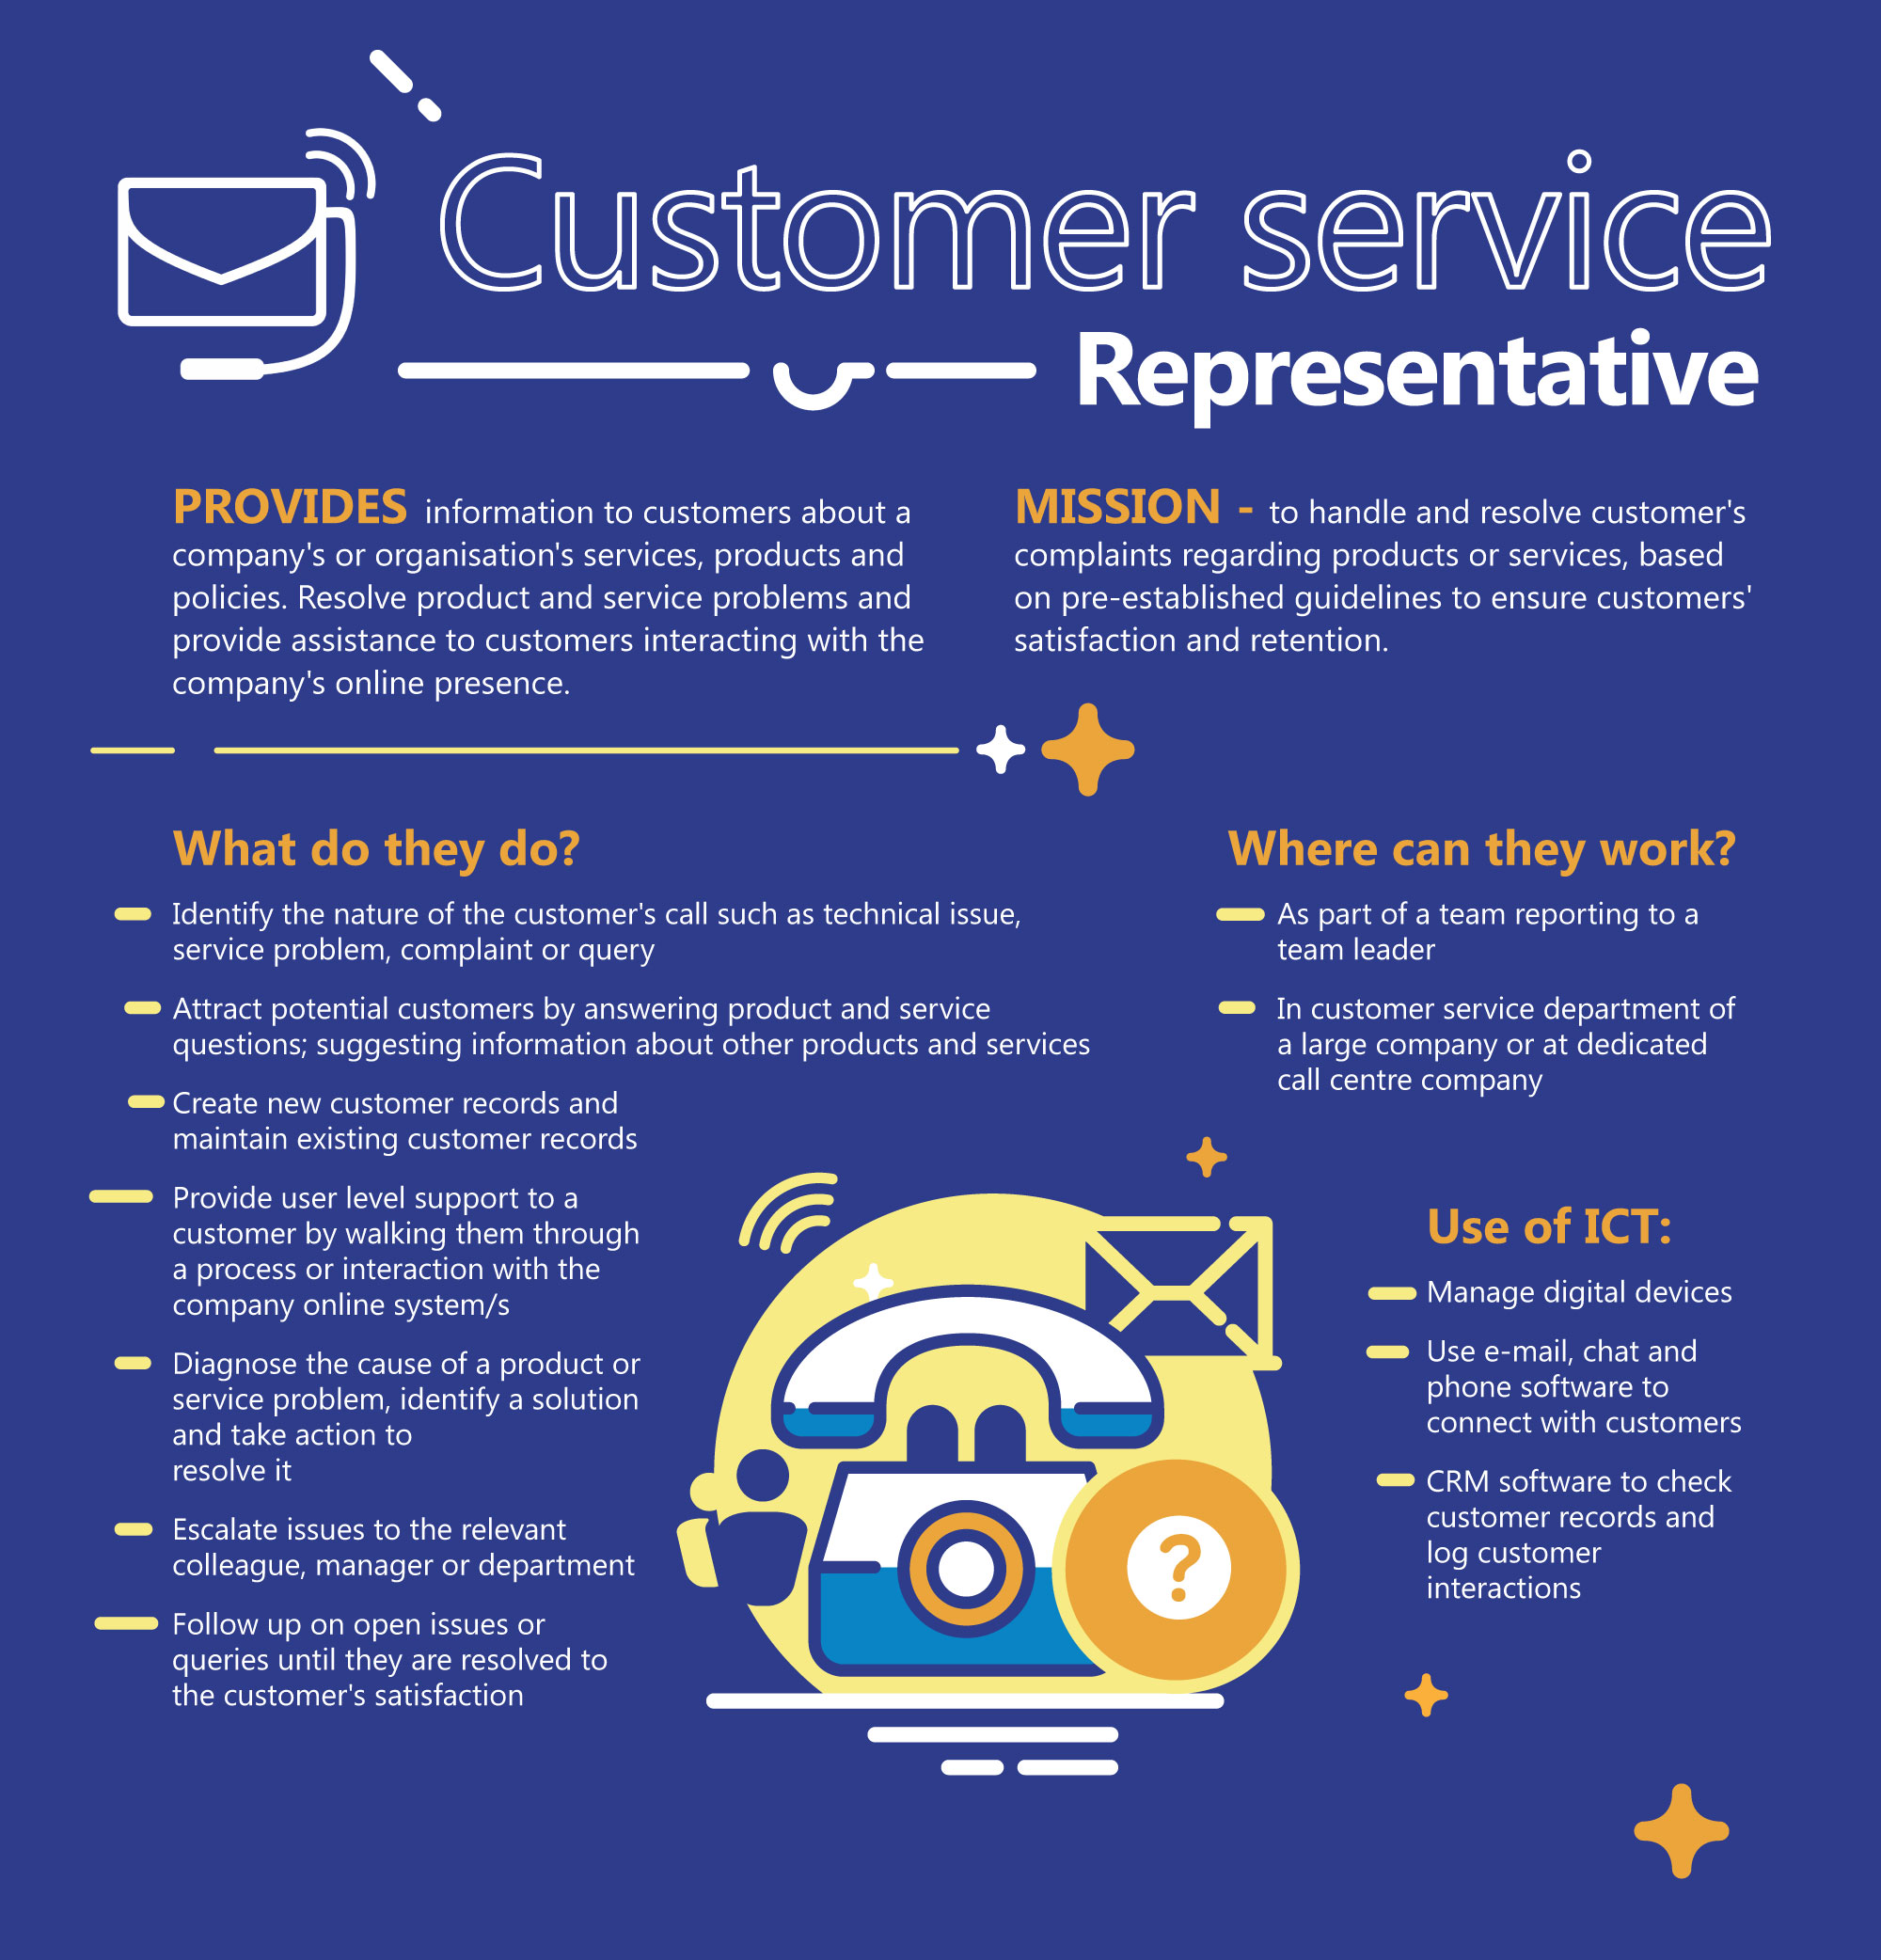 Customer service representative job opportunities